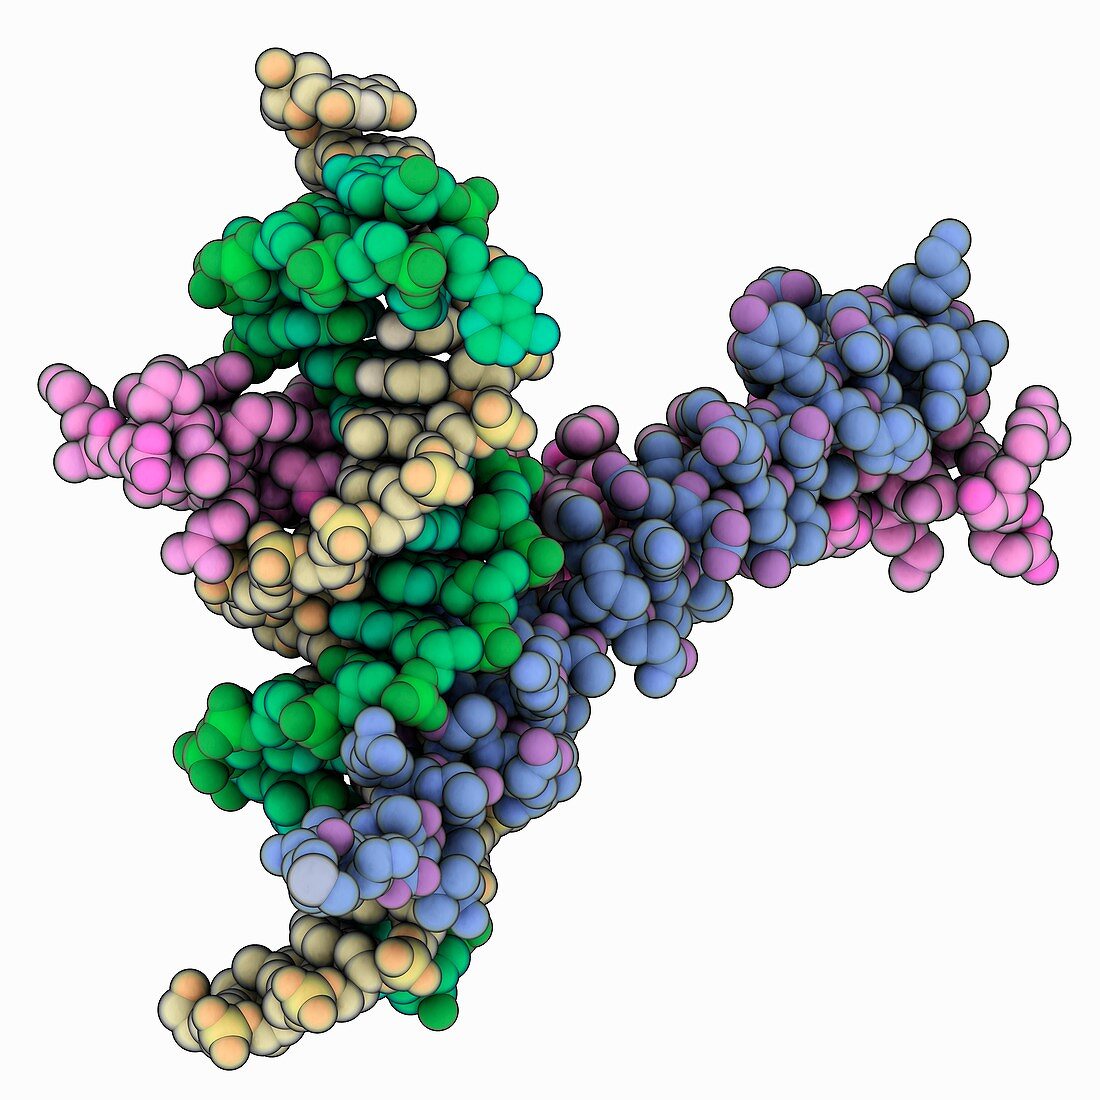 GCN4 leucine zipper complexed with DNA